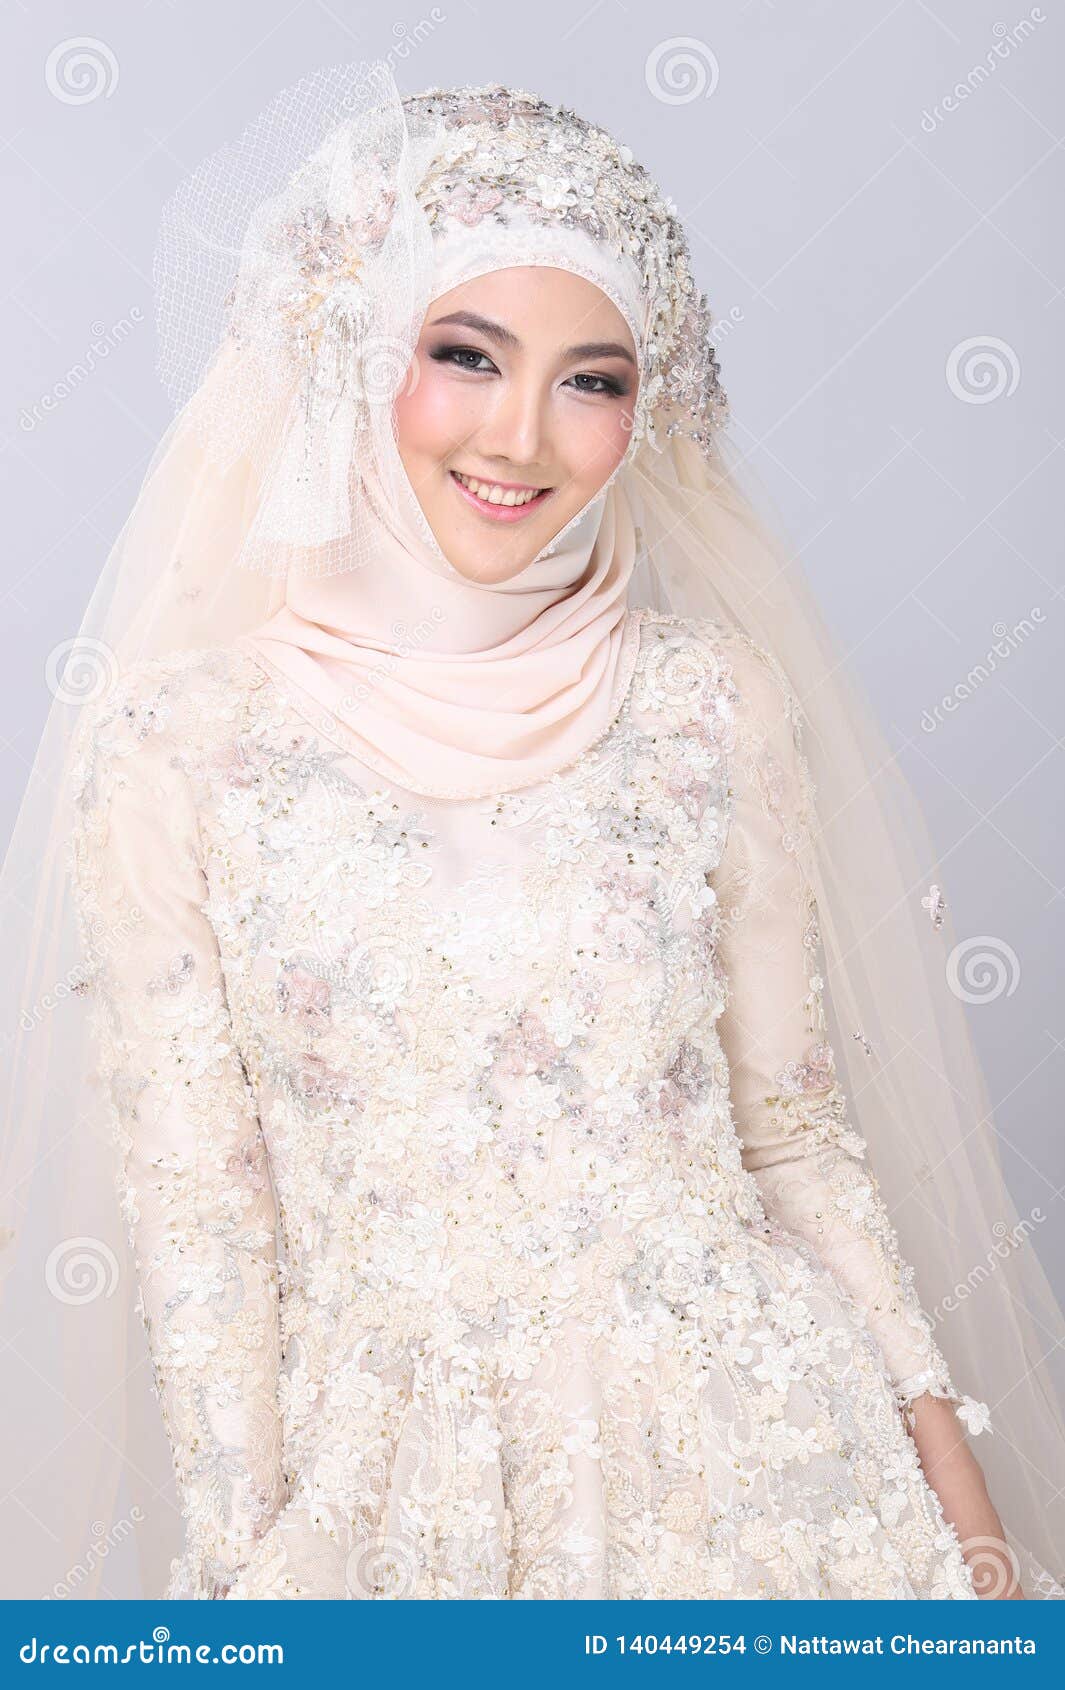 Elegant Hijab Wedding Dresses - Brides & Tailor's Collection